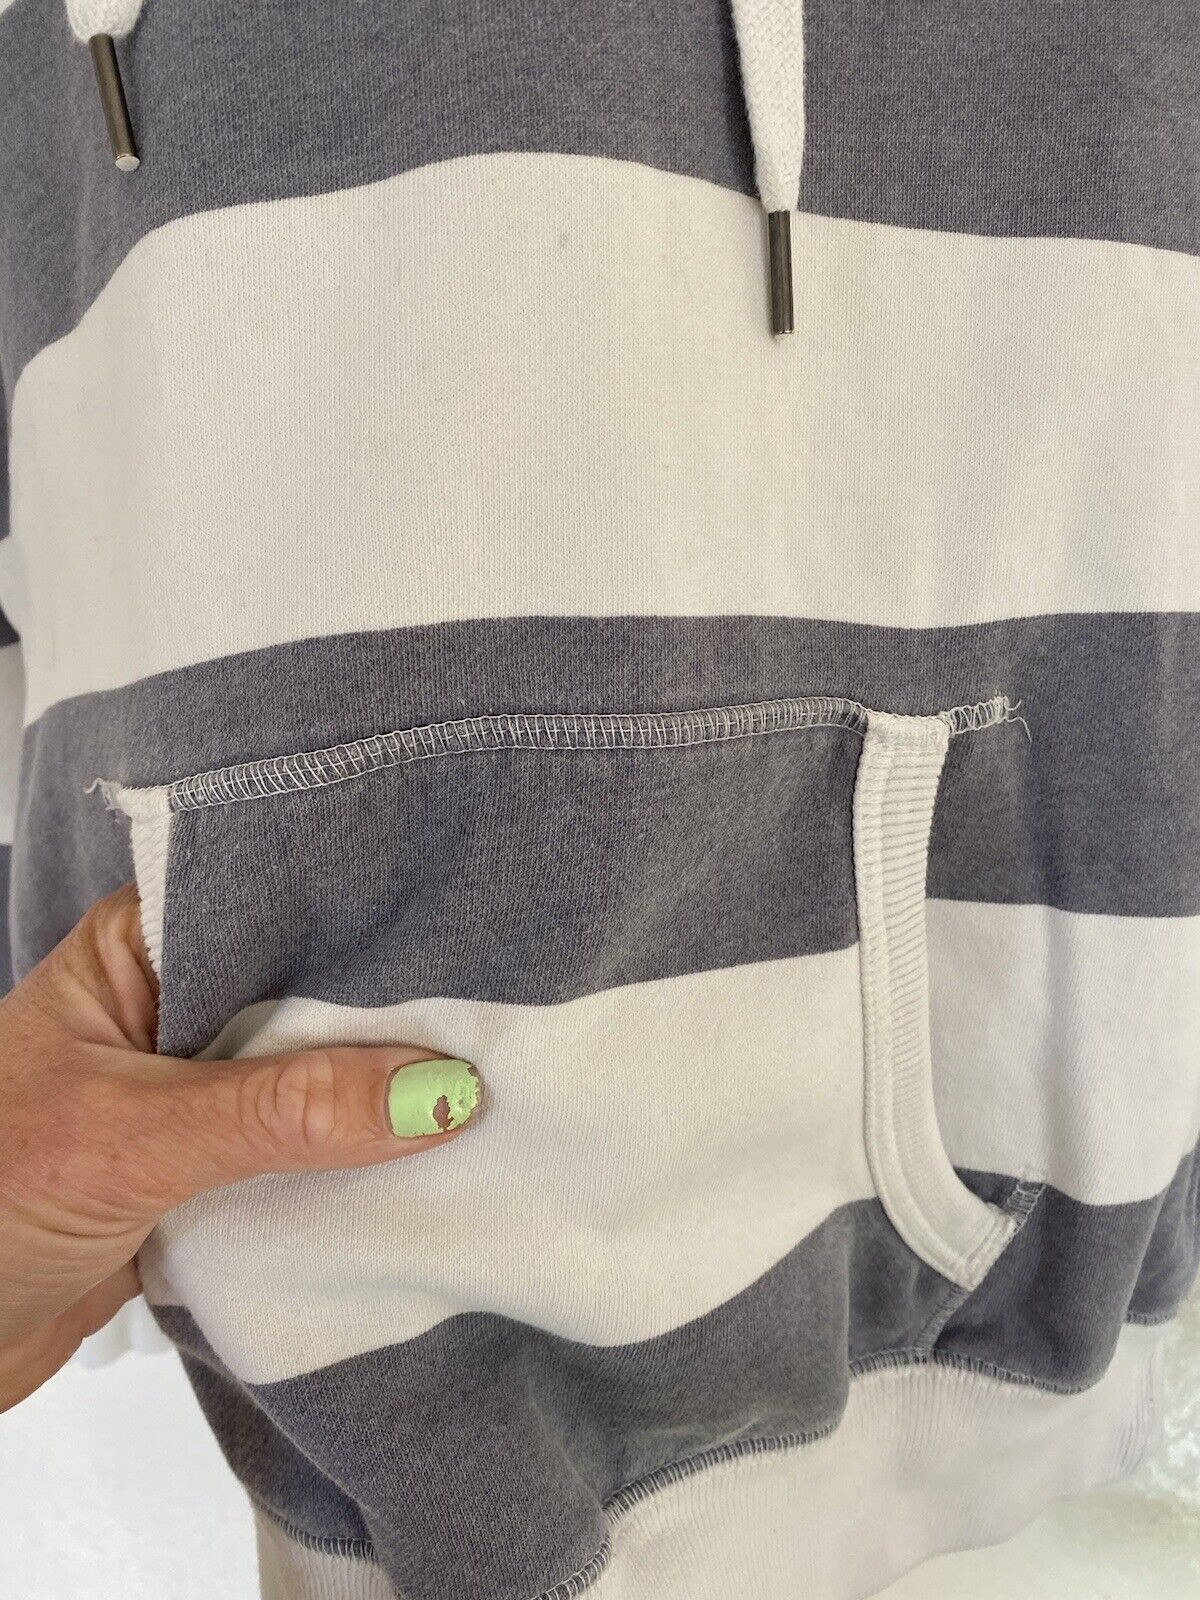 Blue and White Stripe Pullover Hoodie Sweatshirt - Ocean City - Women's Medium